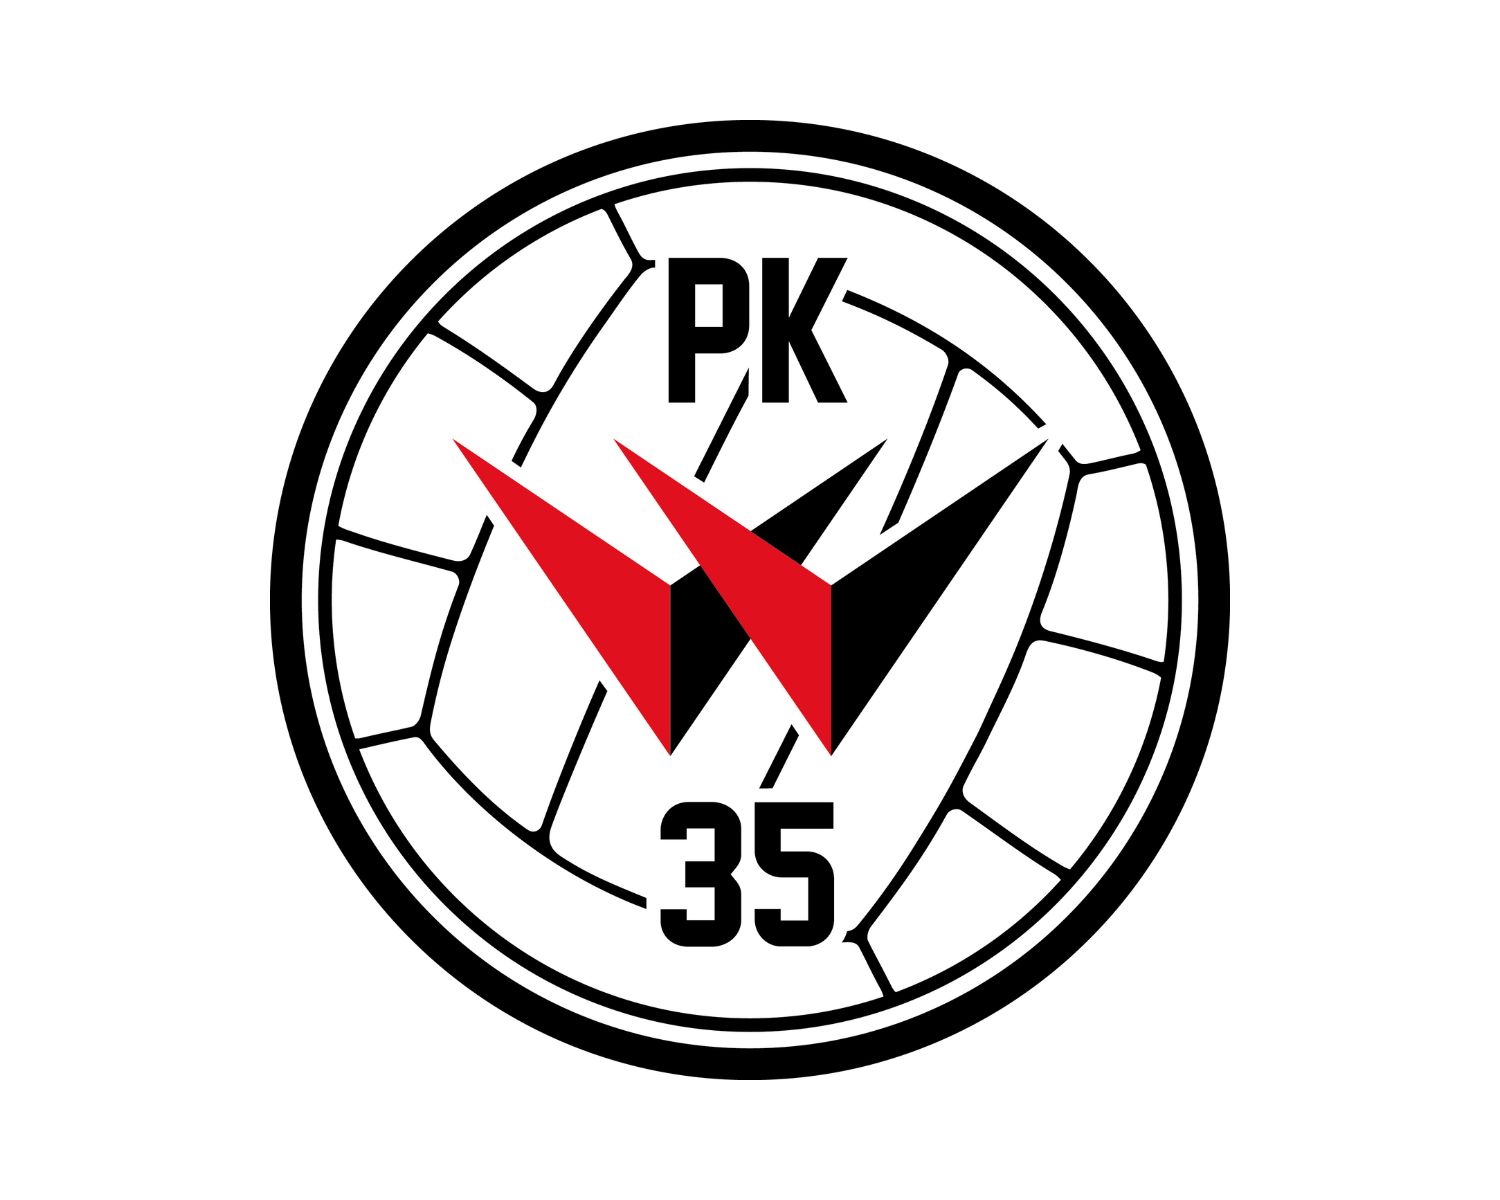 pk-35-vantaa-19-football-club-facts